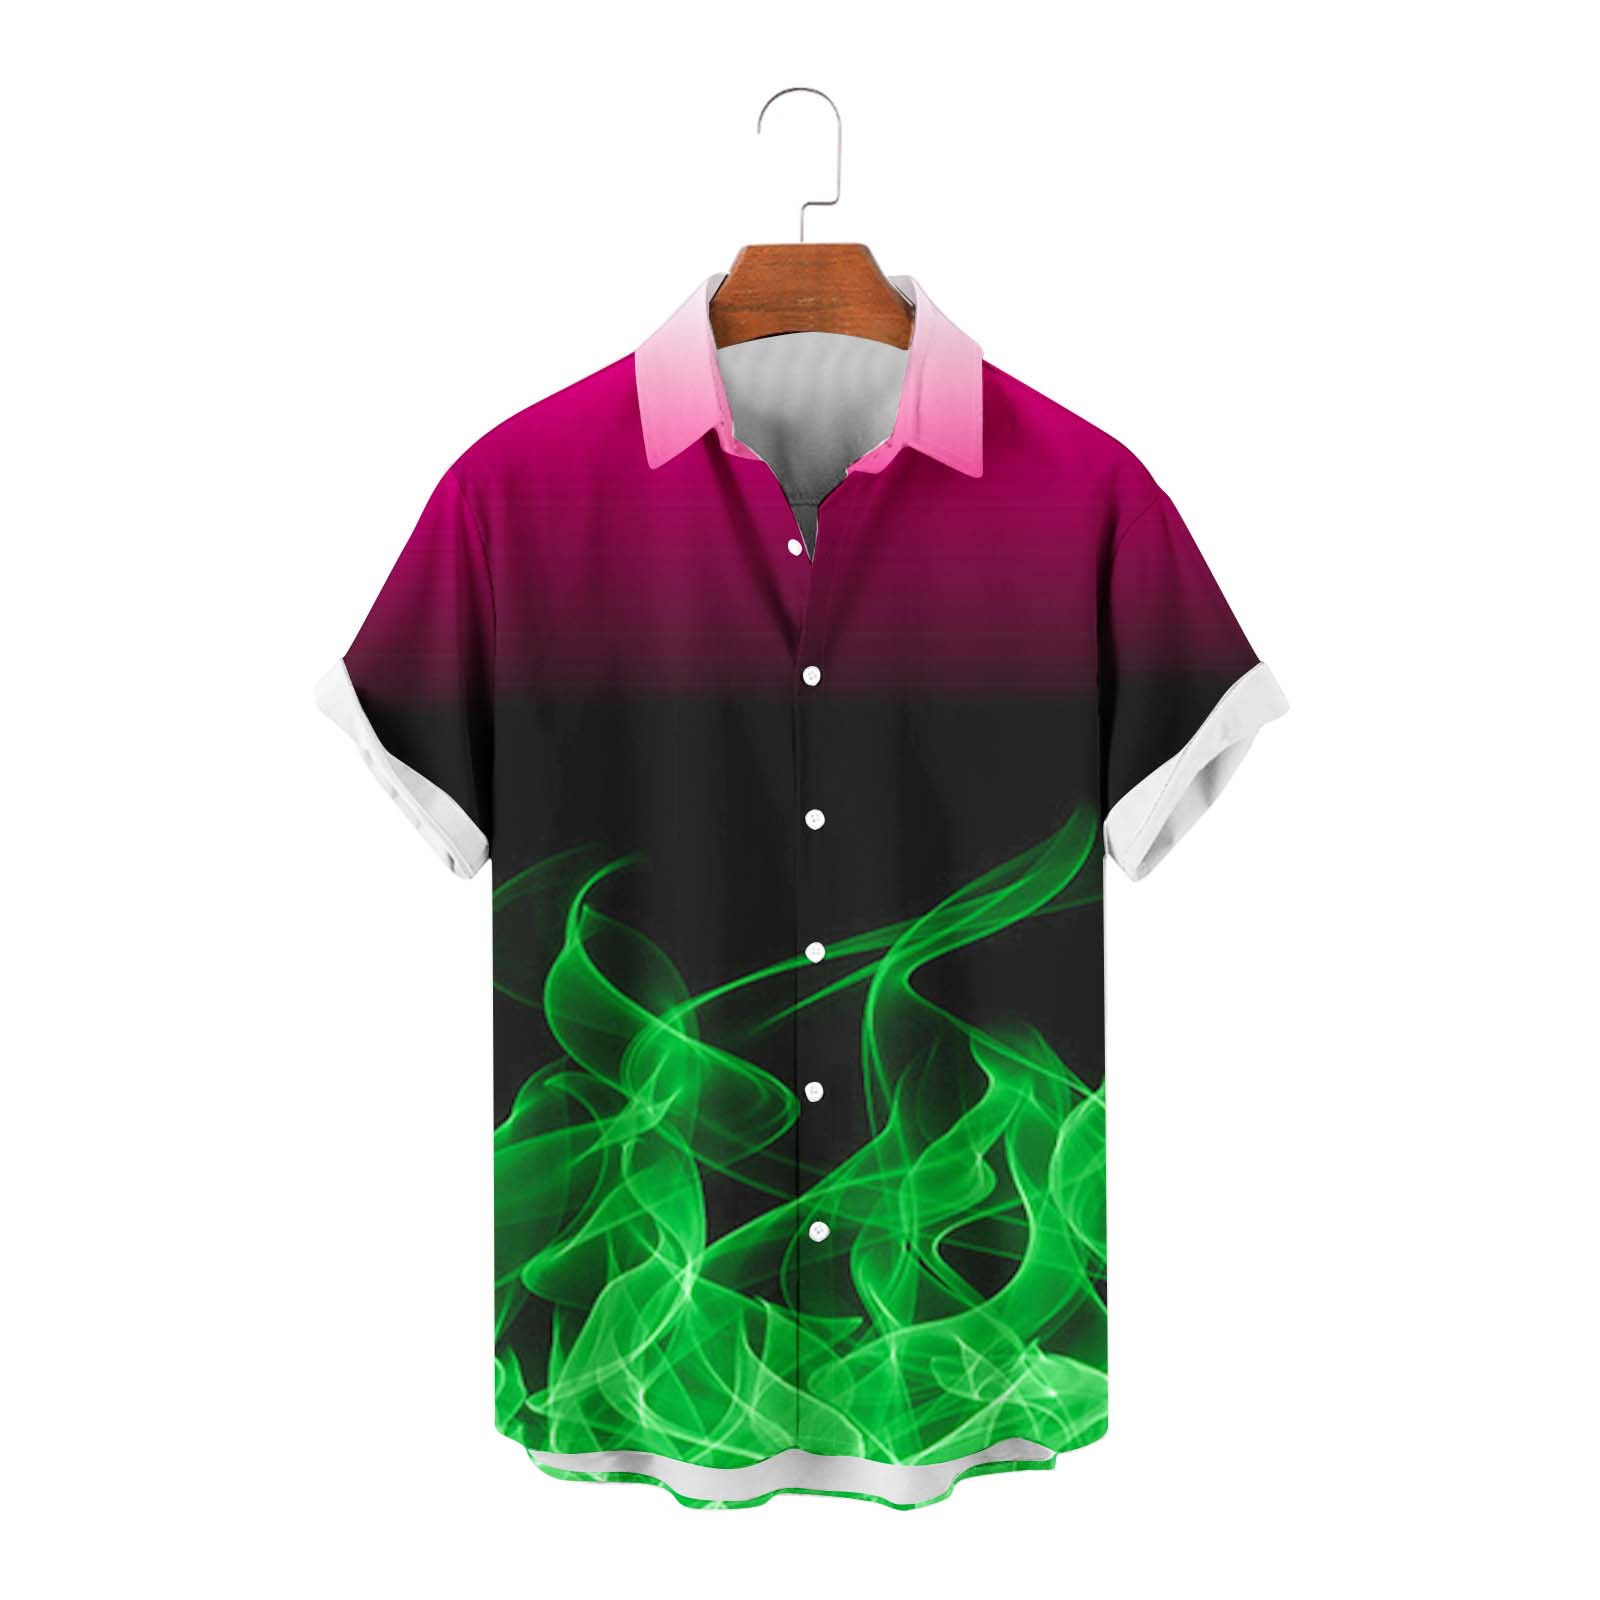 QIPOPIQ Men's Short Sleeve Turndown Collar Shirts Men 3D Fire Pattern Hawaiian Shirt Summer Fashion Printed Have Pockets Button Shirt Tops Tees Shirt Gift for Father & Him 2023 Deals Green XL - image 2 of 4